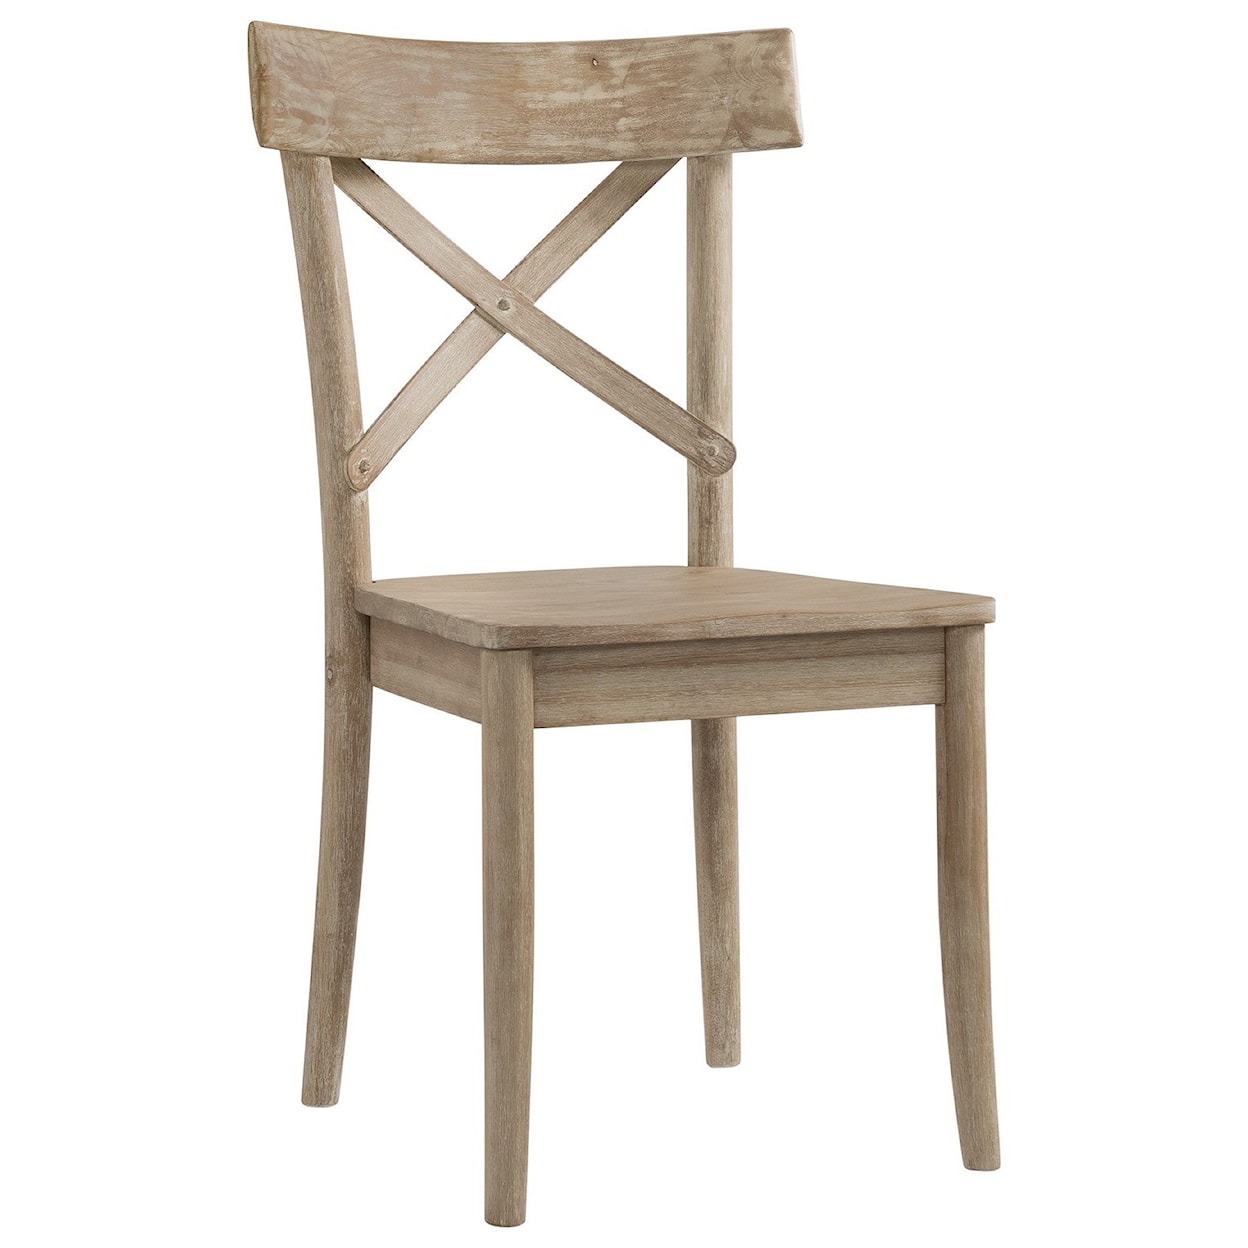 Elements Callista X-Back Wooden Side Chair